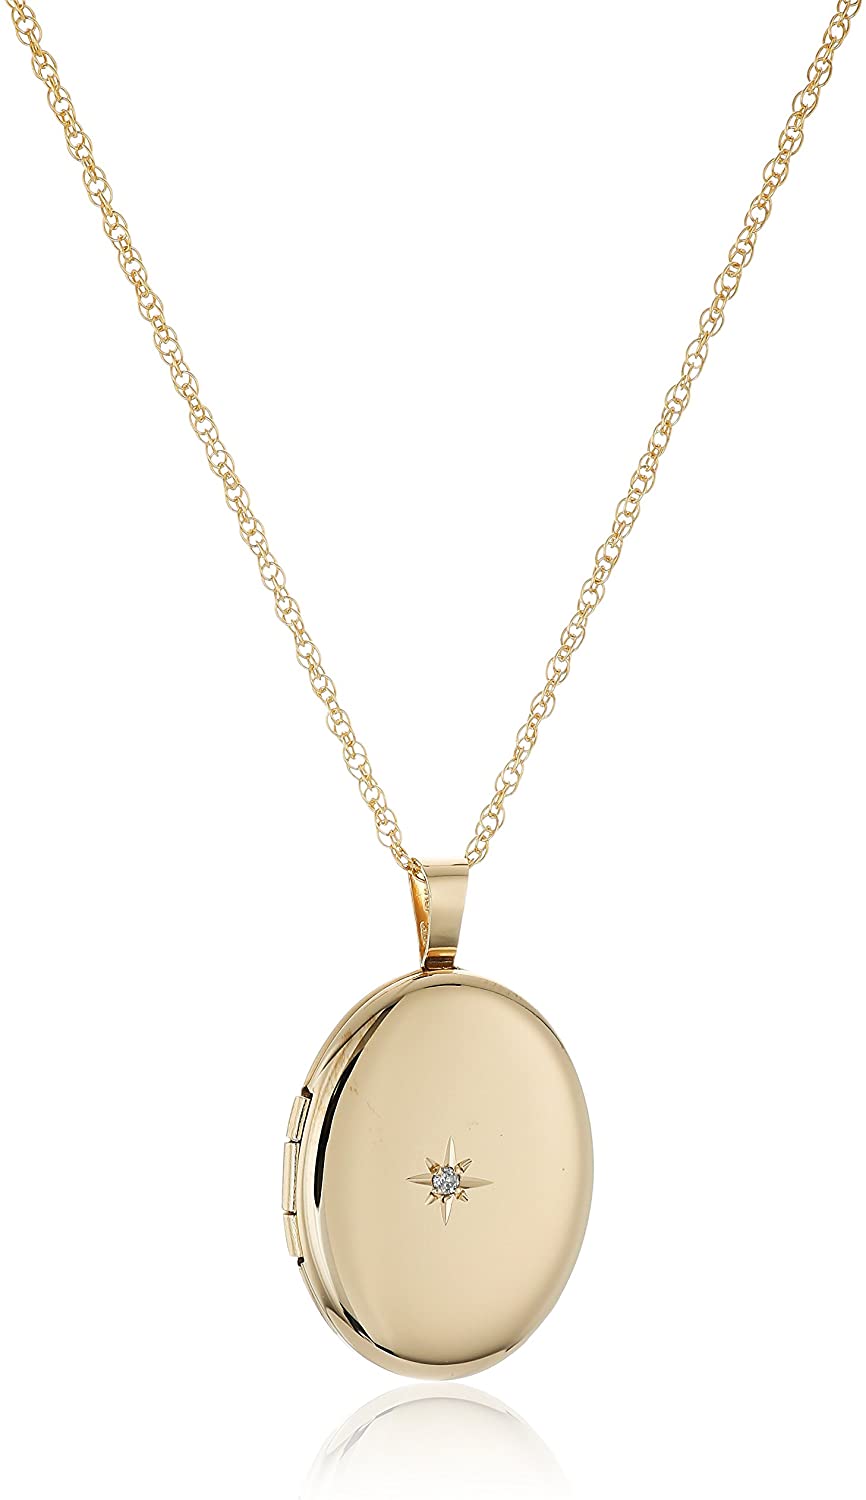 14k Gold-Filled Polished Oval Pendant with Genuine Diamond Locket Necklace, 18